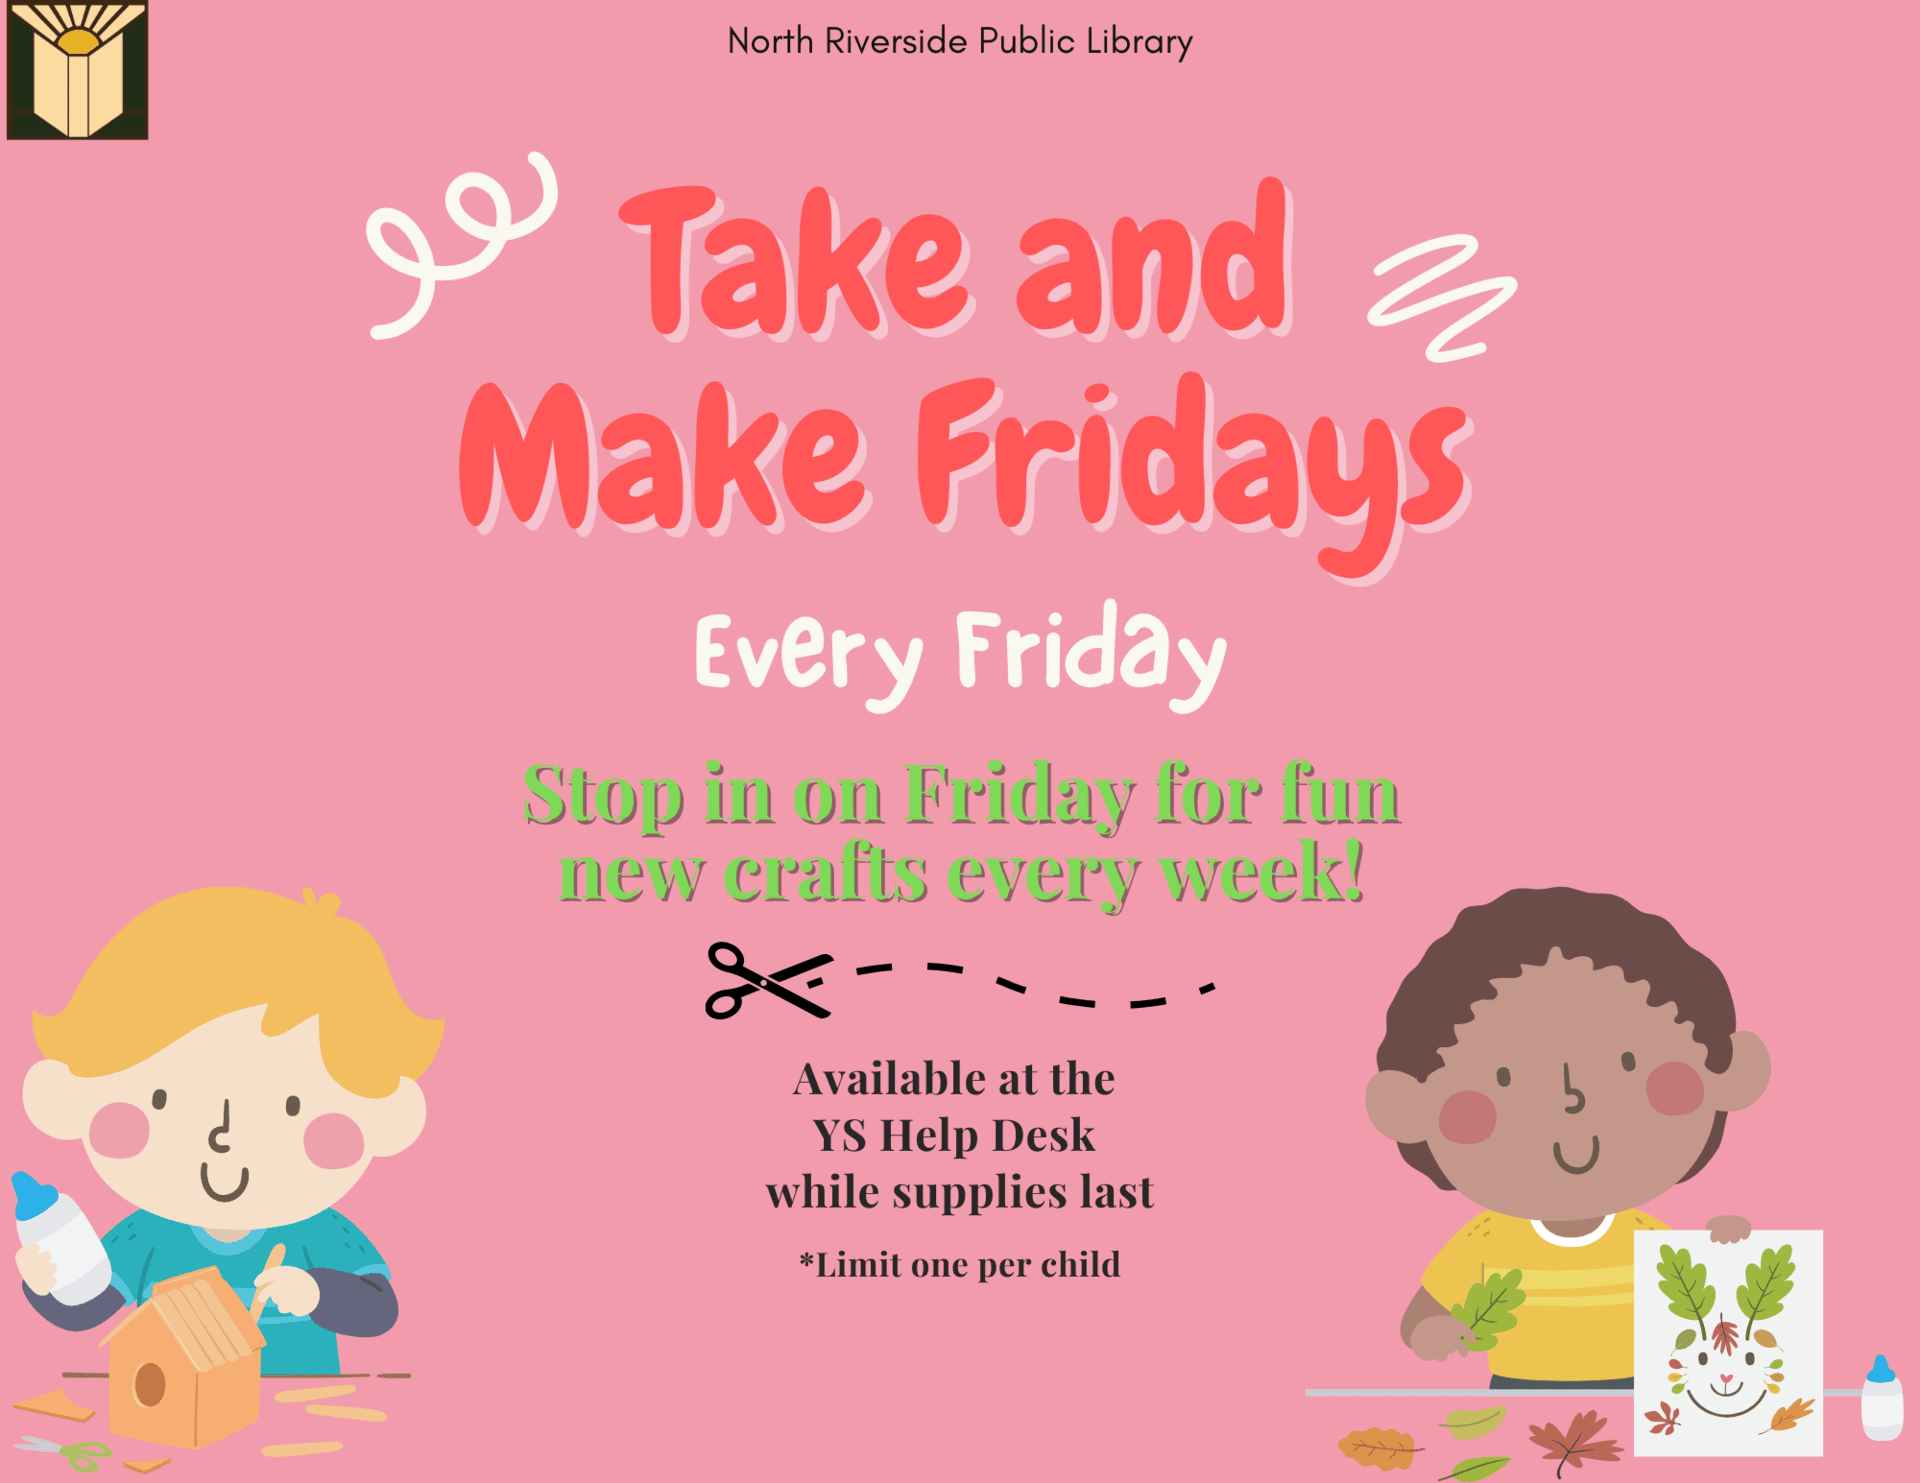 Take and Make Fridays program flyer for kids